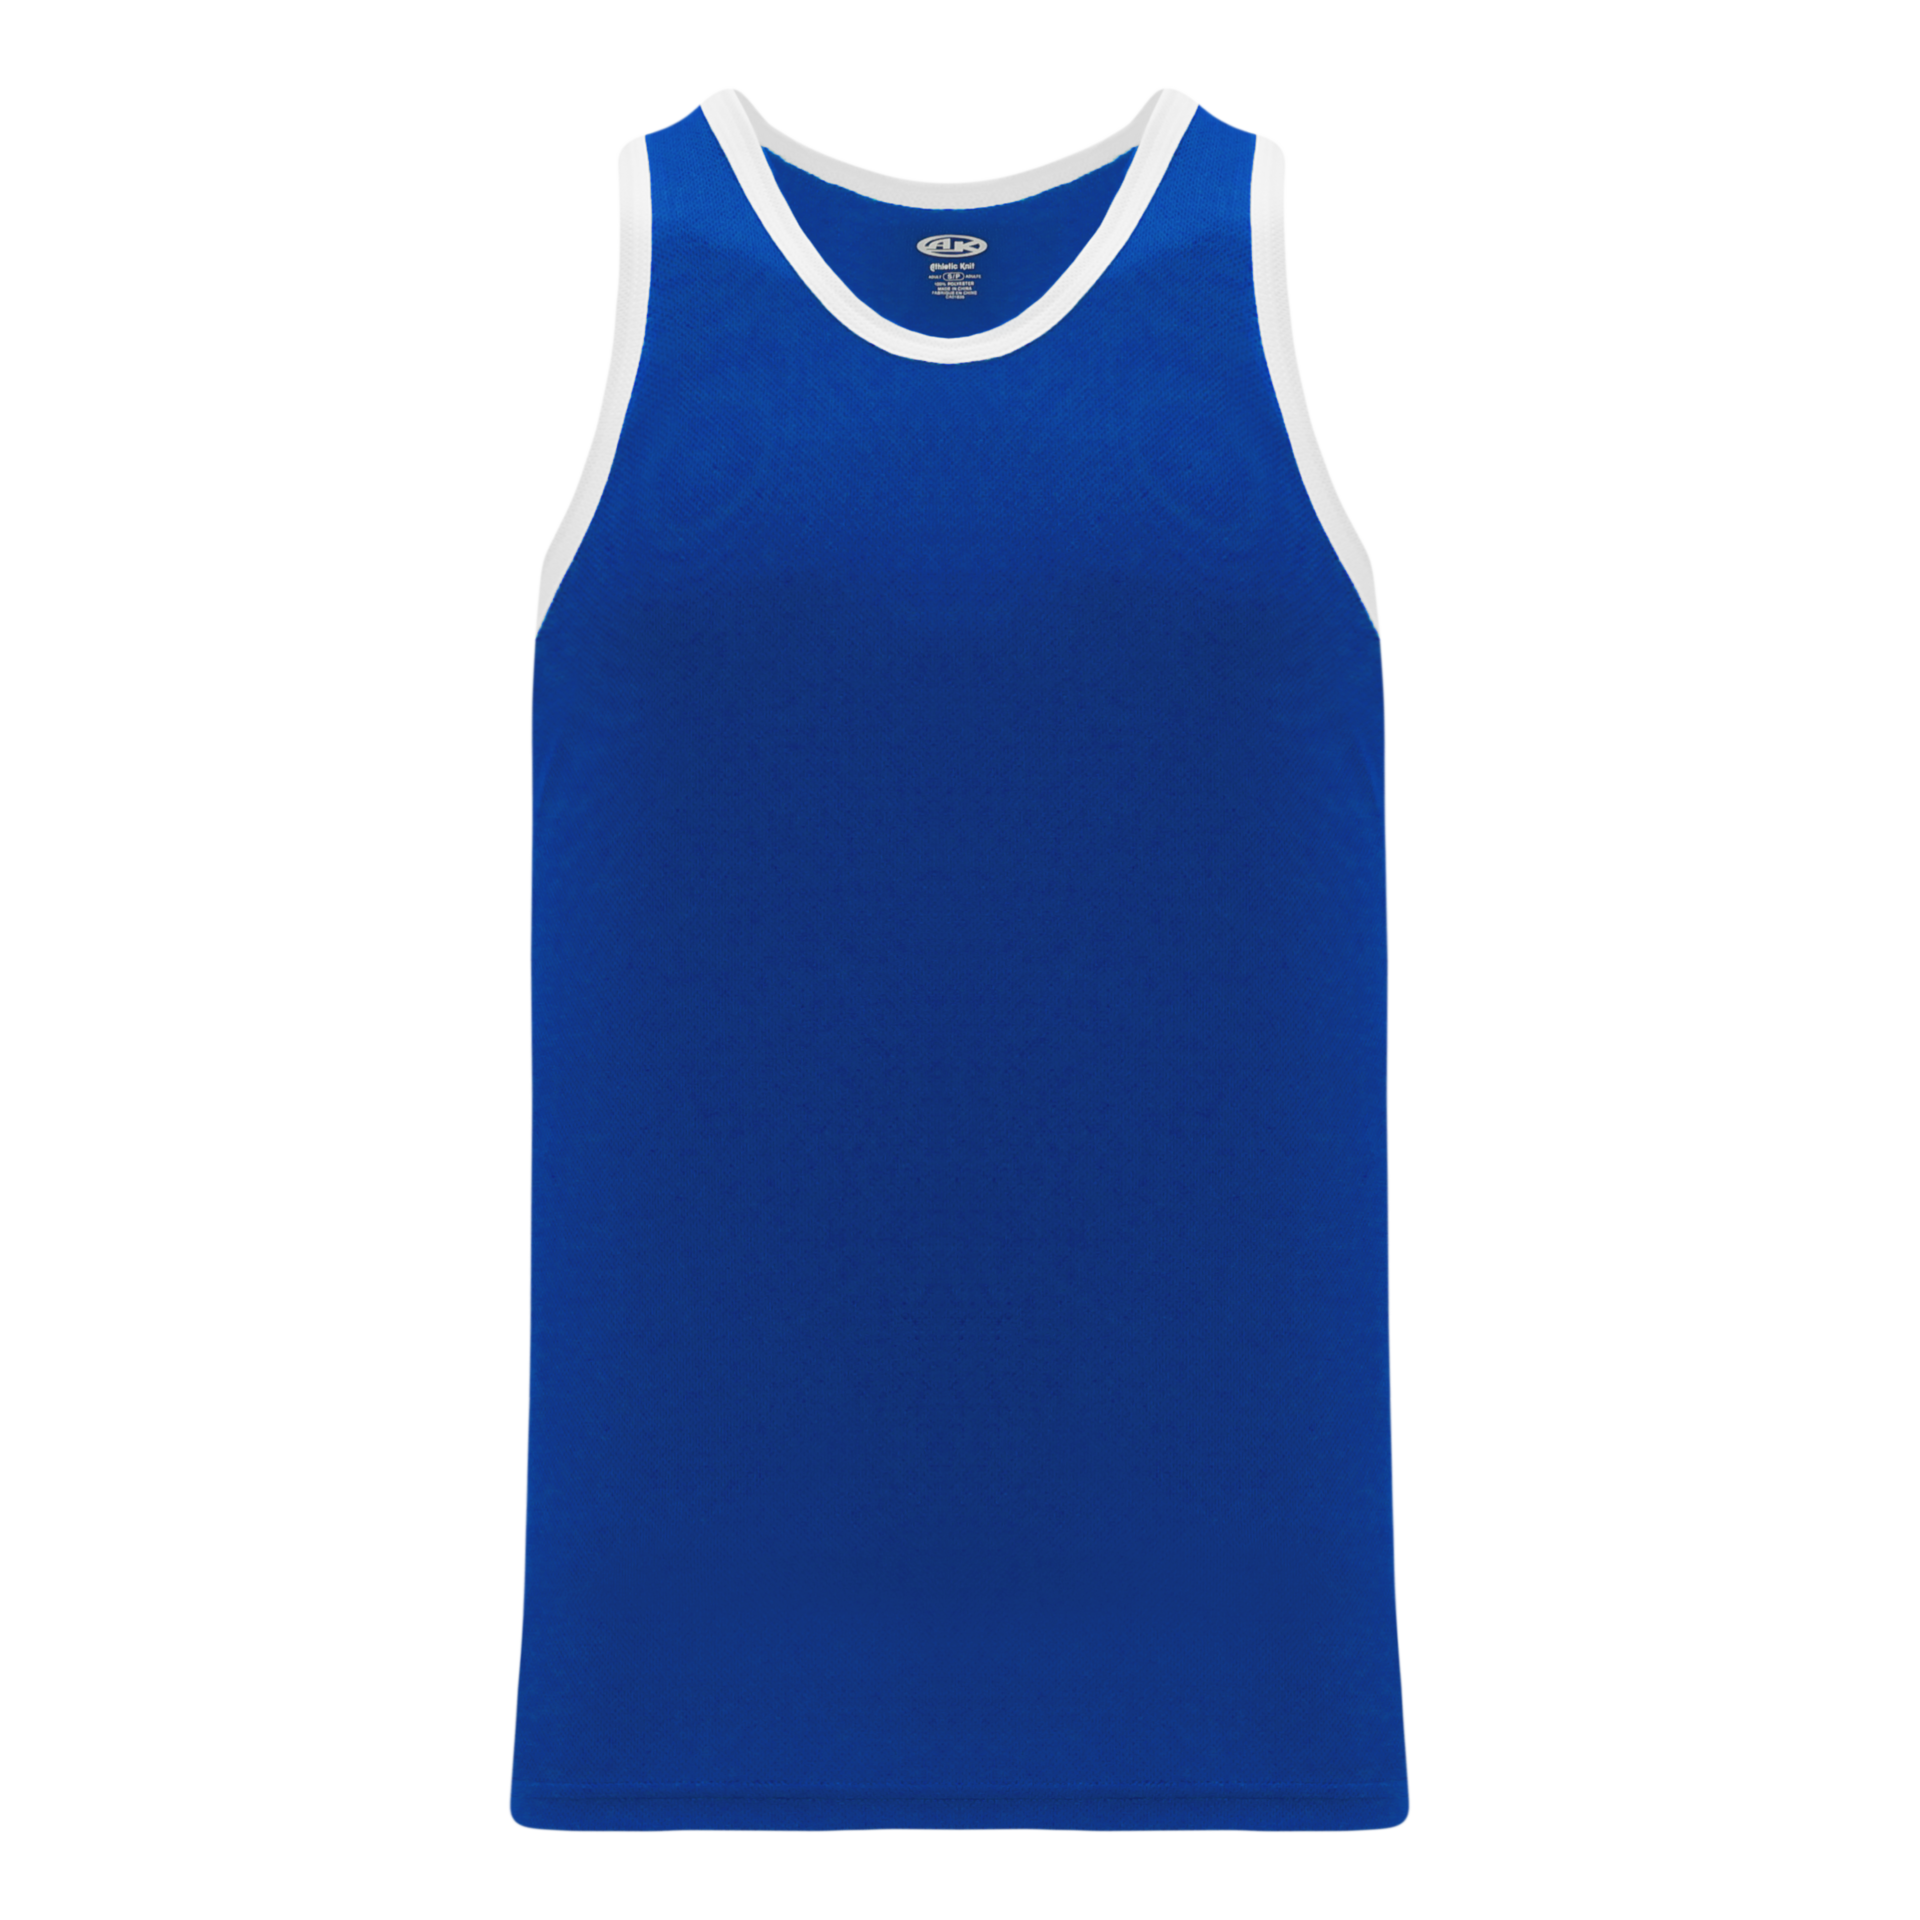 Champro Men's Reversible Basketball Jersey - Royal/White - Medium